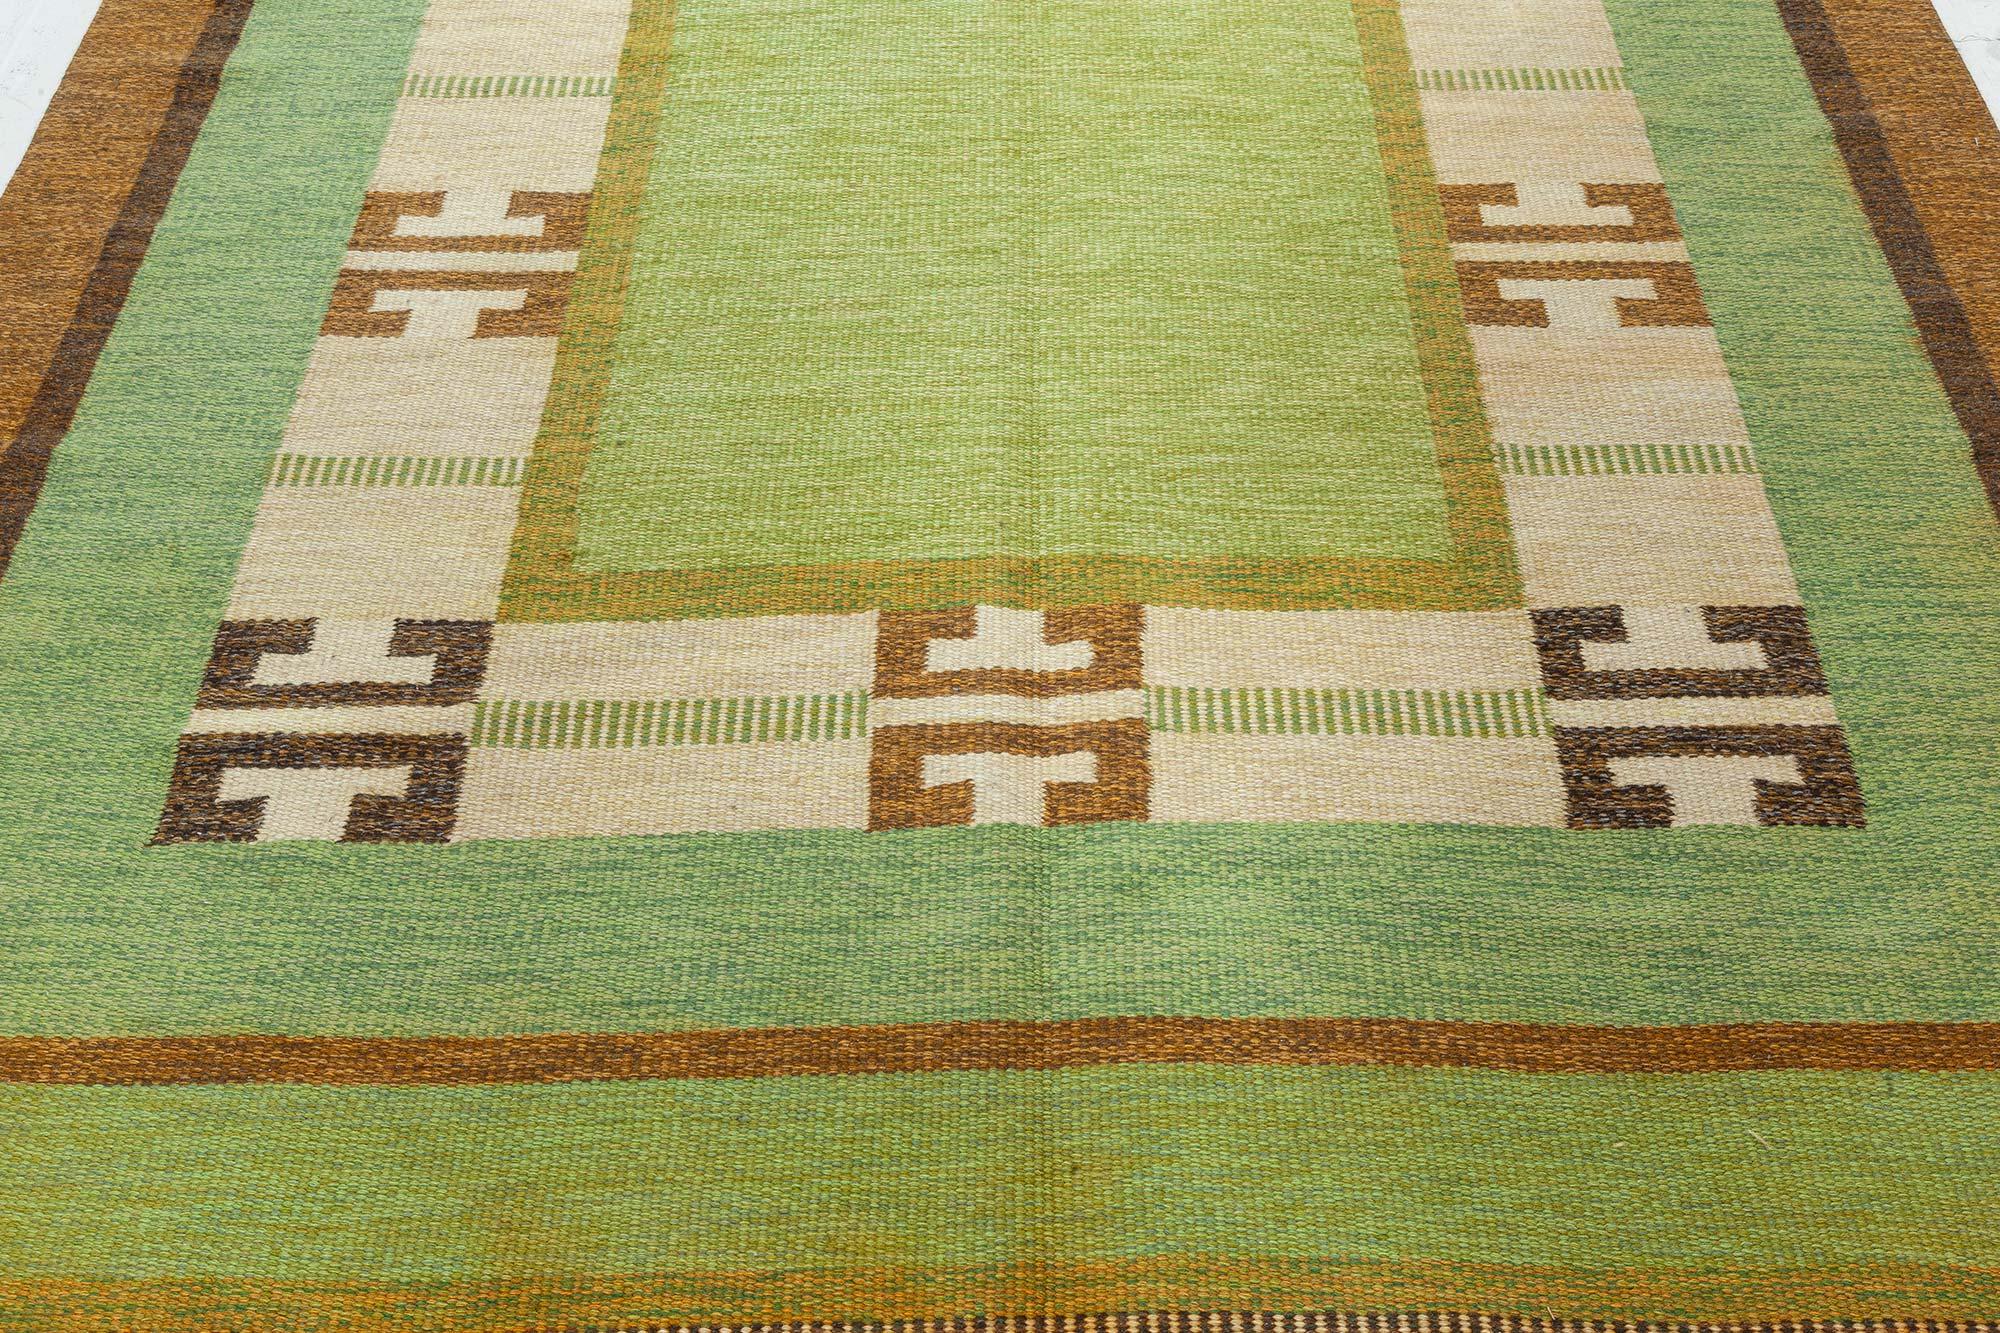 Vintage Green Flat-weave Rug by Ingegerd Silow
Size: 6'3